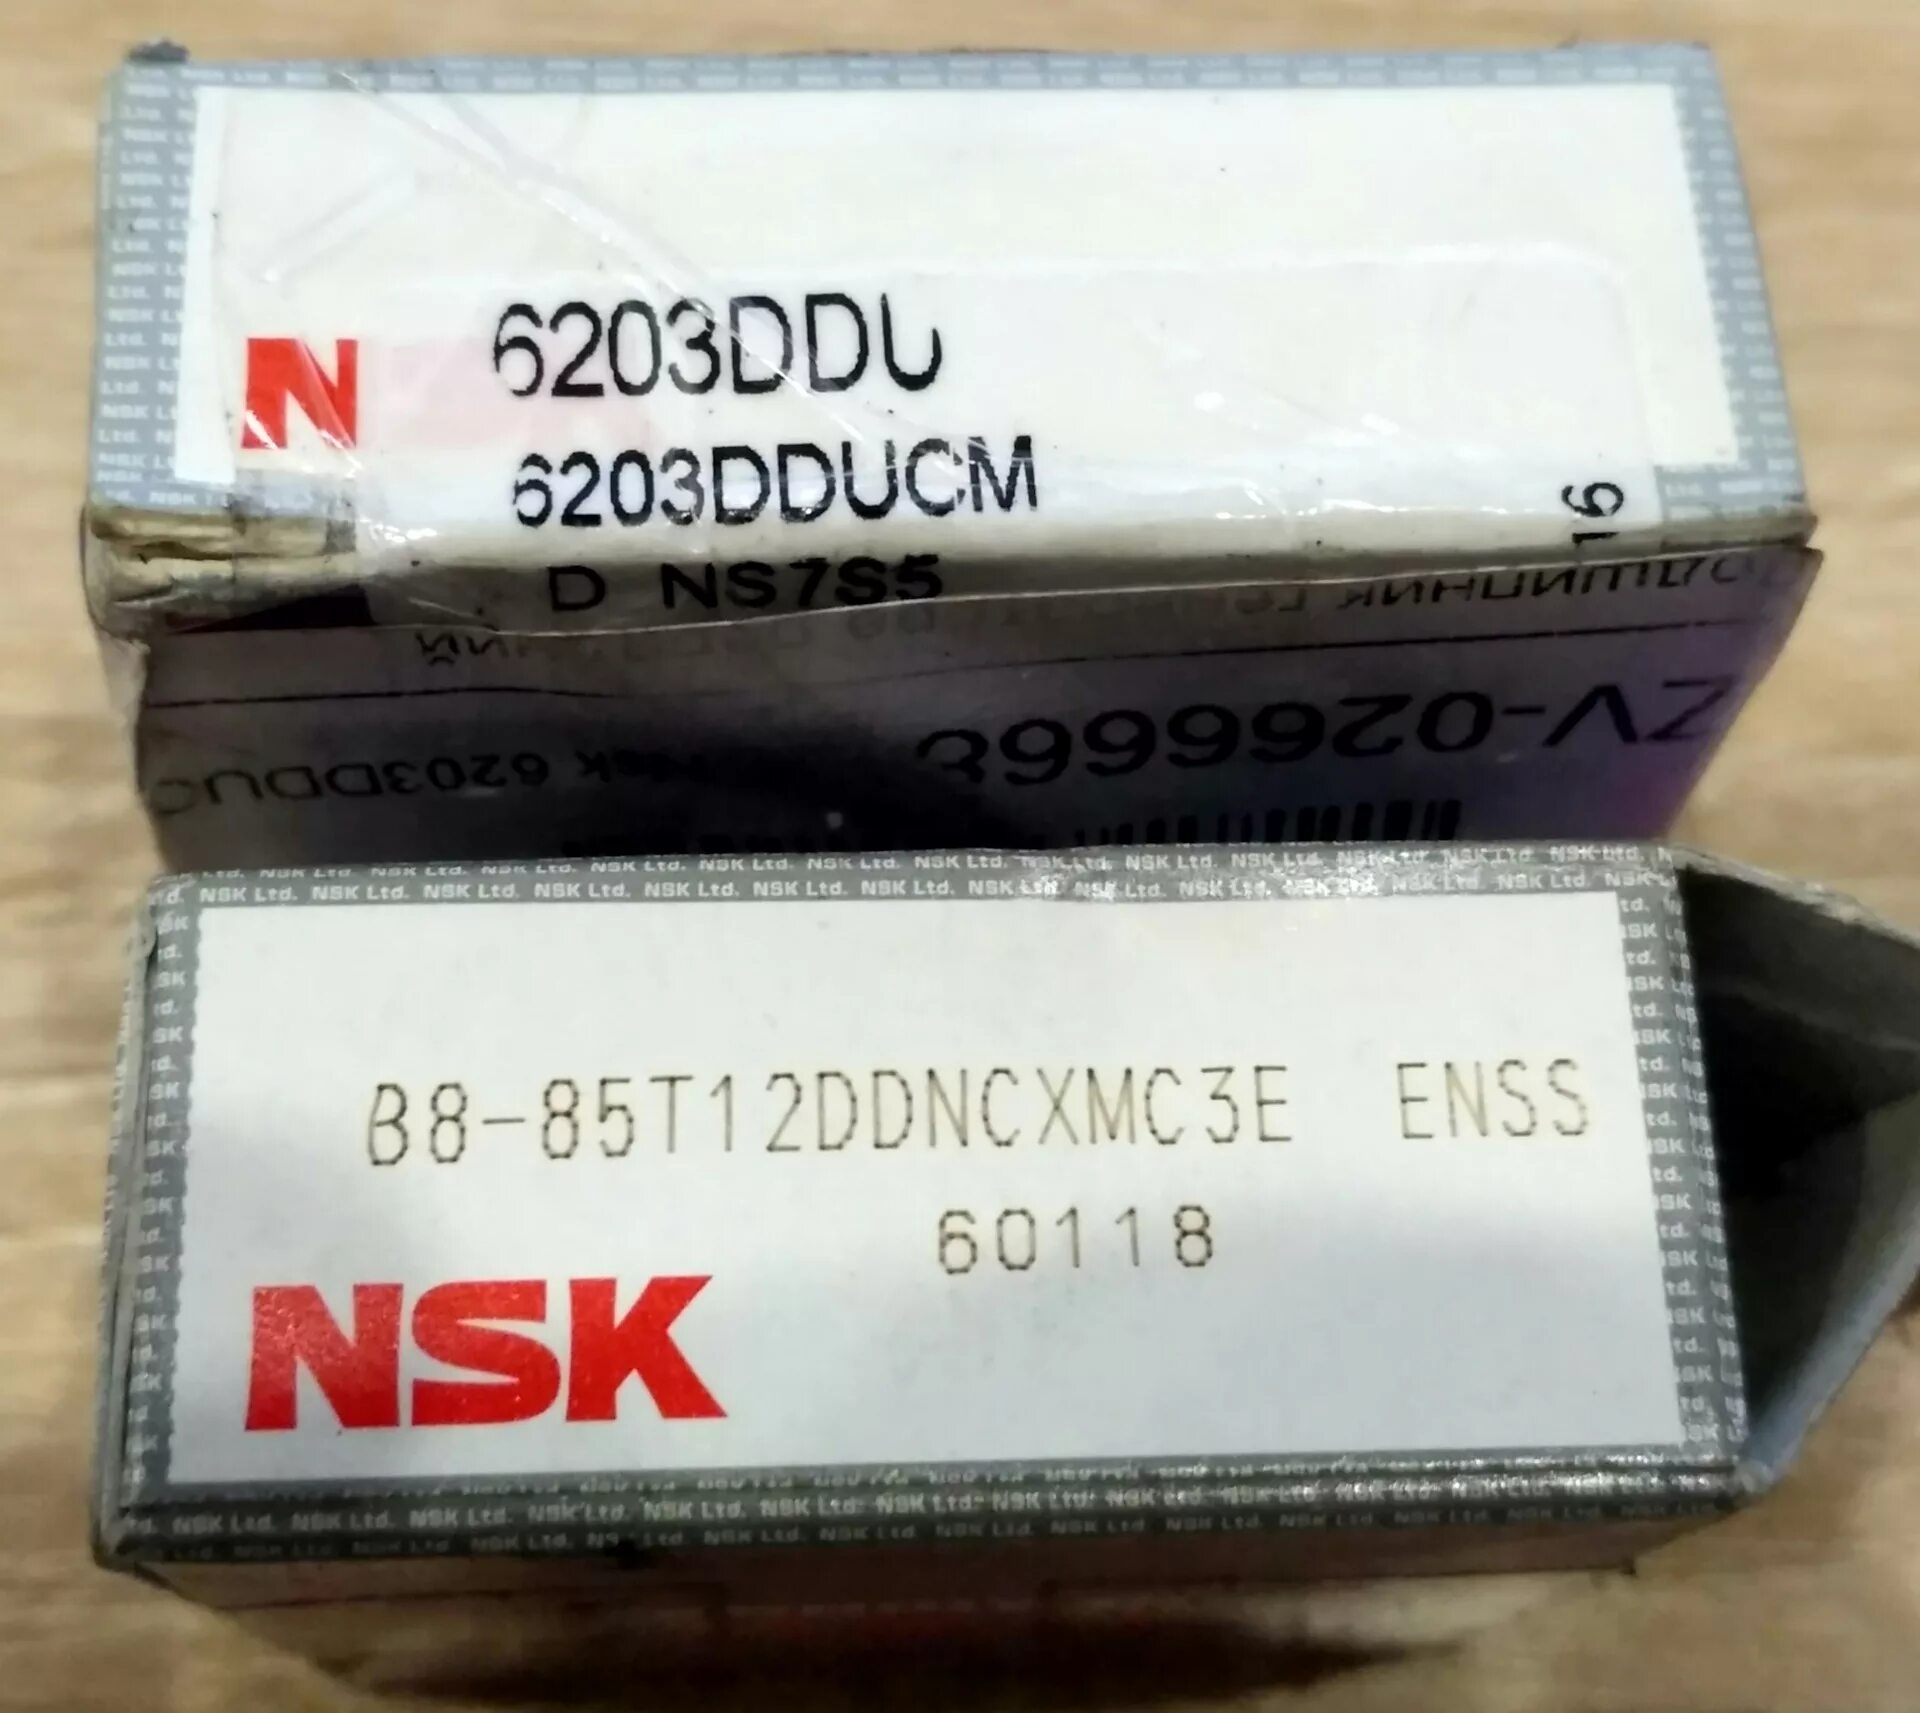 С 85 no 8. NSK b885t12ddncxmc3e. NSK b8-85t12ddncxmc3e подшипник генератора. NSK b8-85t12ddncxmc3e подшипник генератора задний. NSK b8-85t12ddncxmc3e.